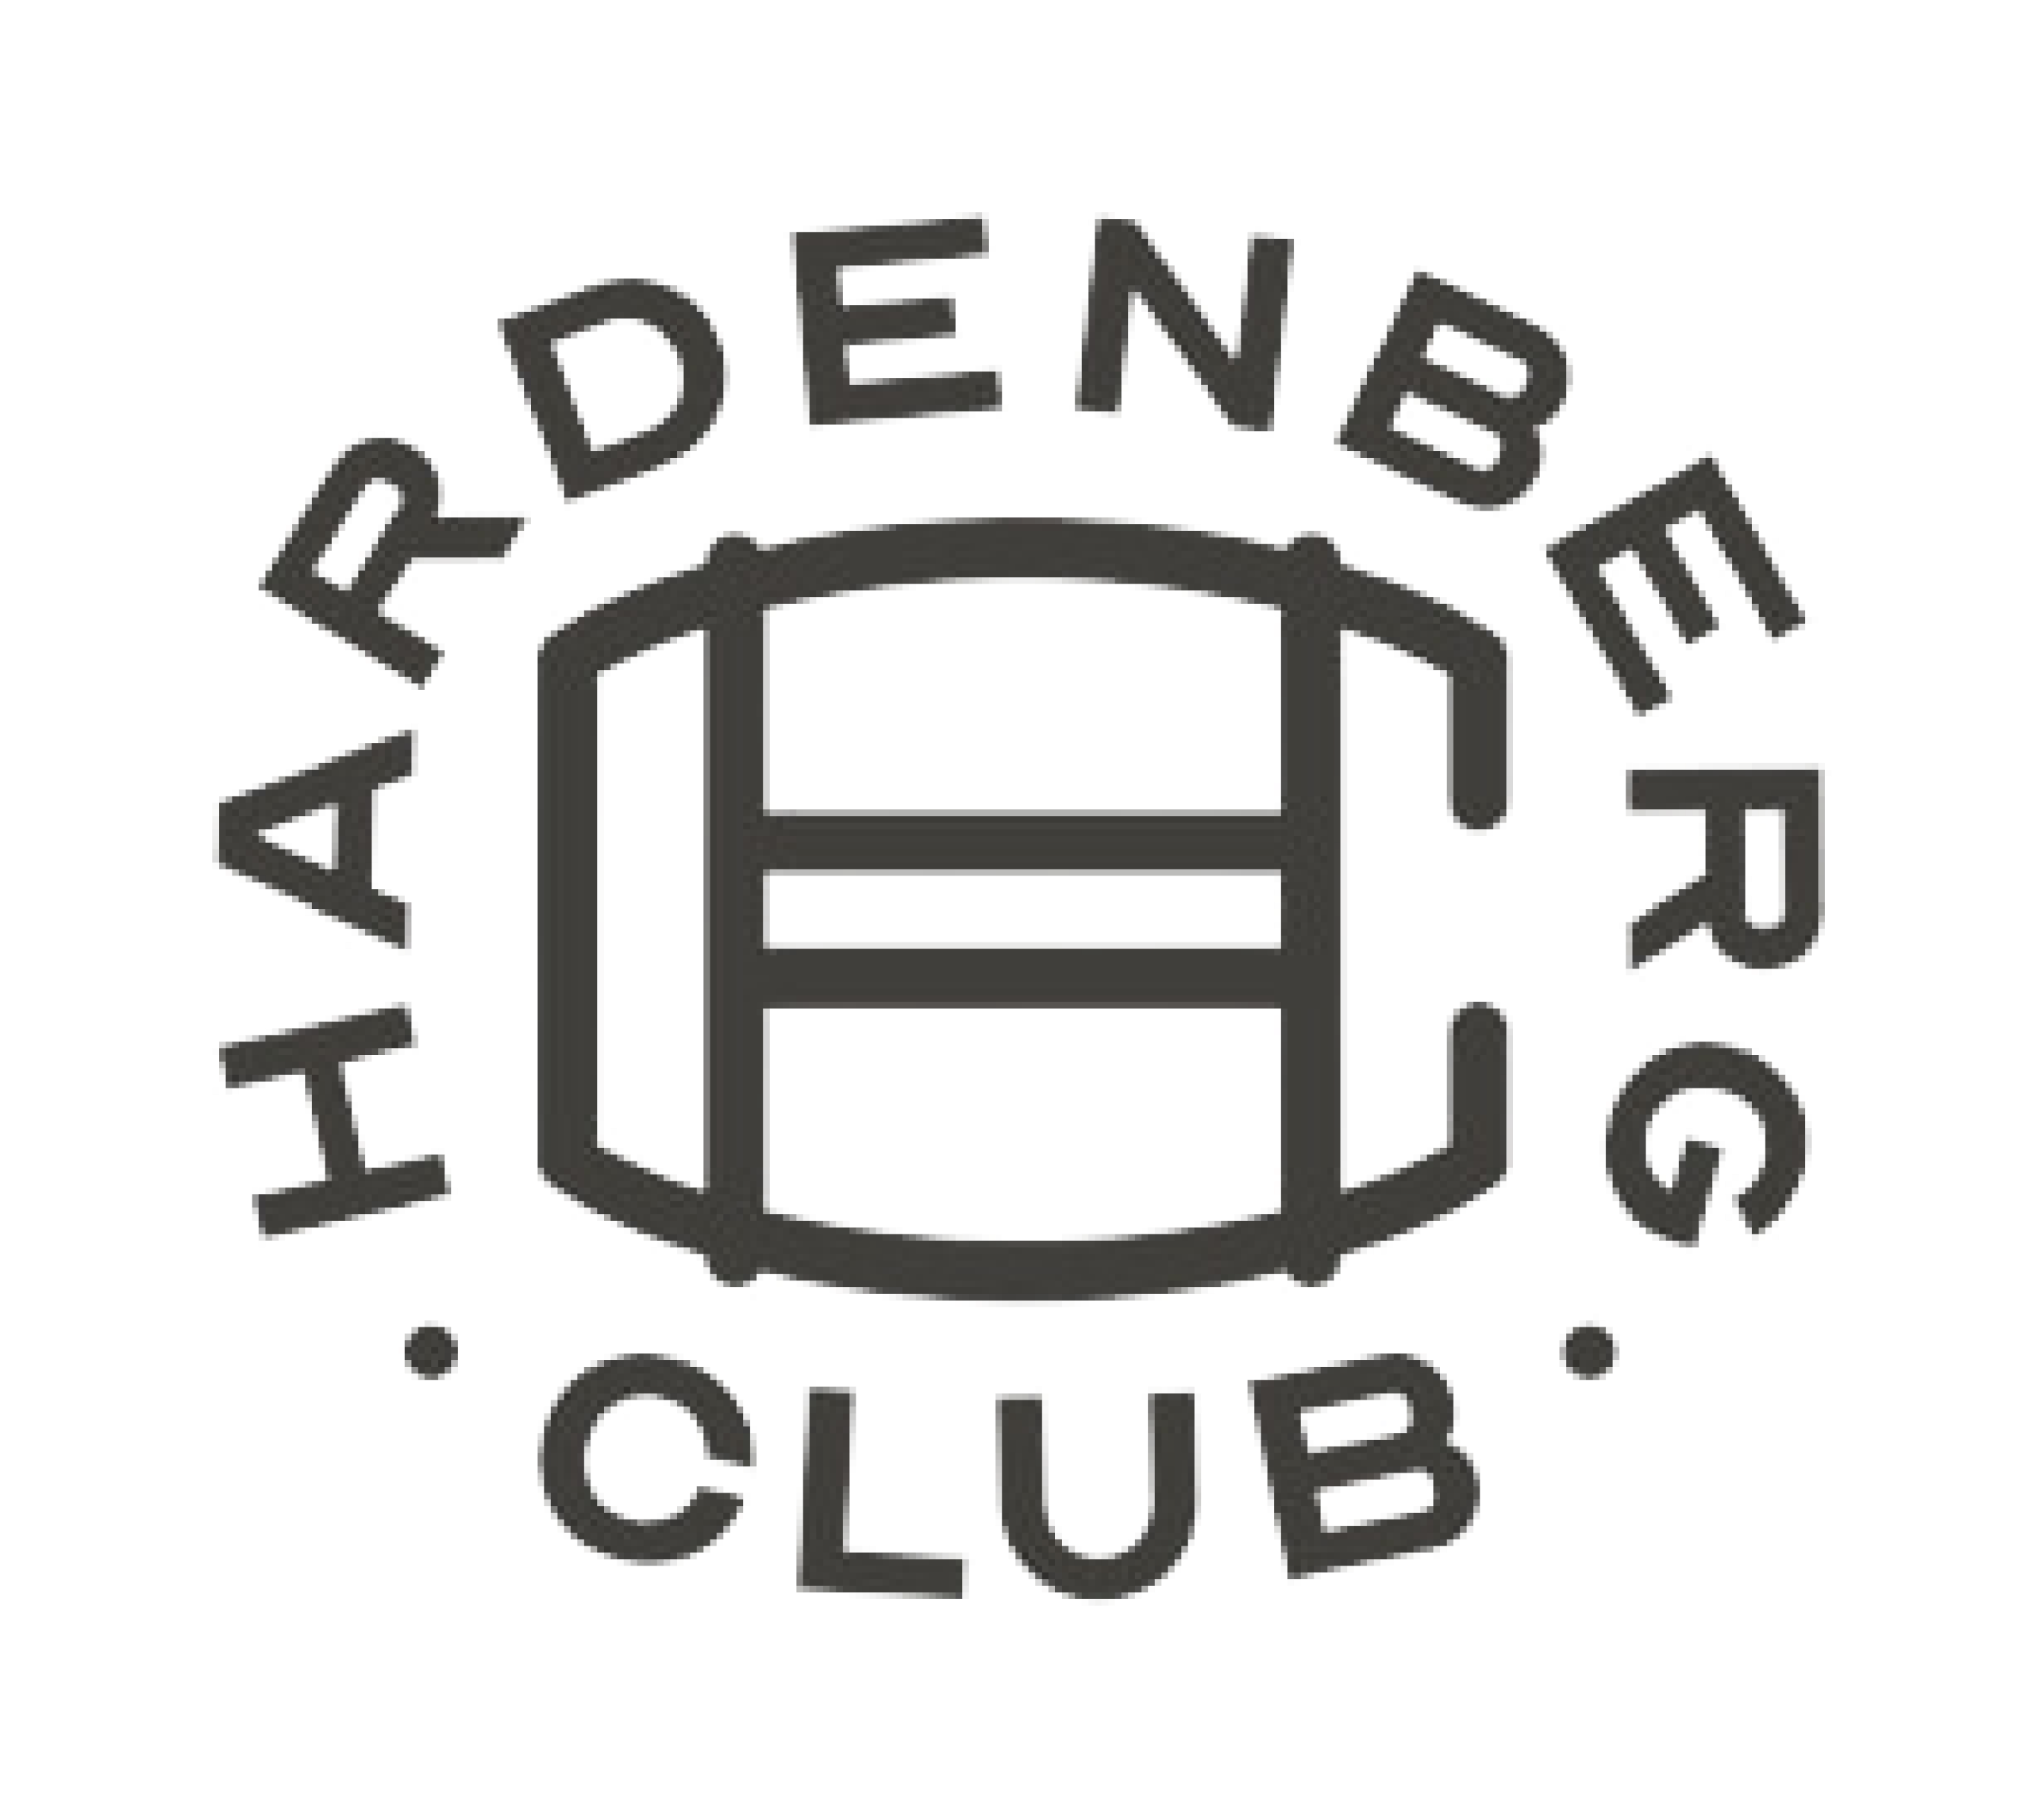 Hardenberg Club